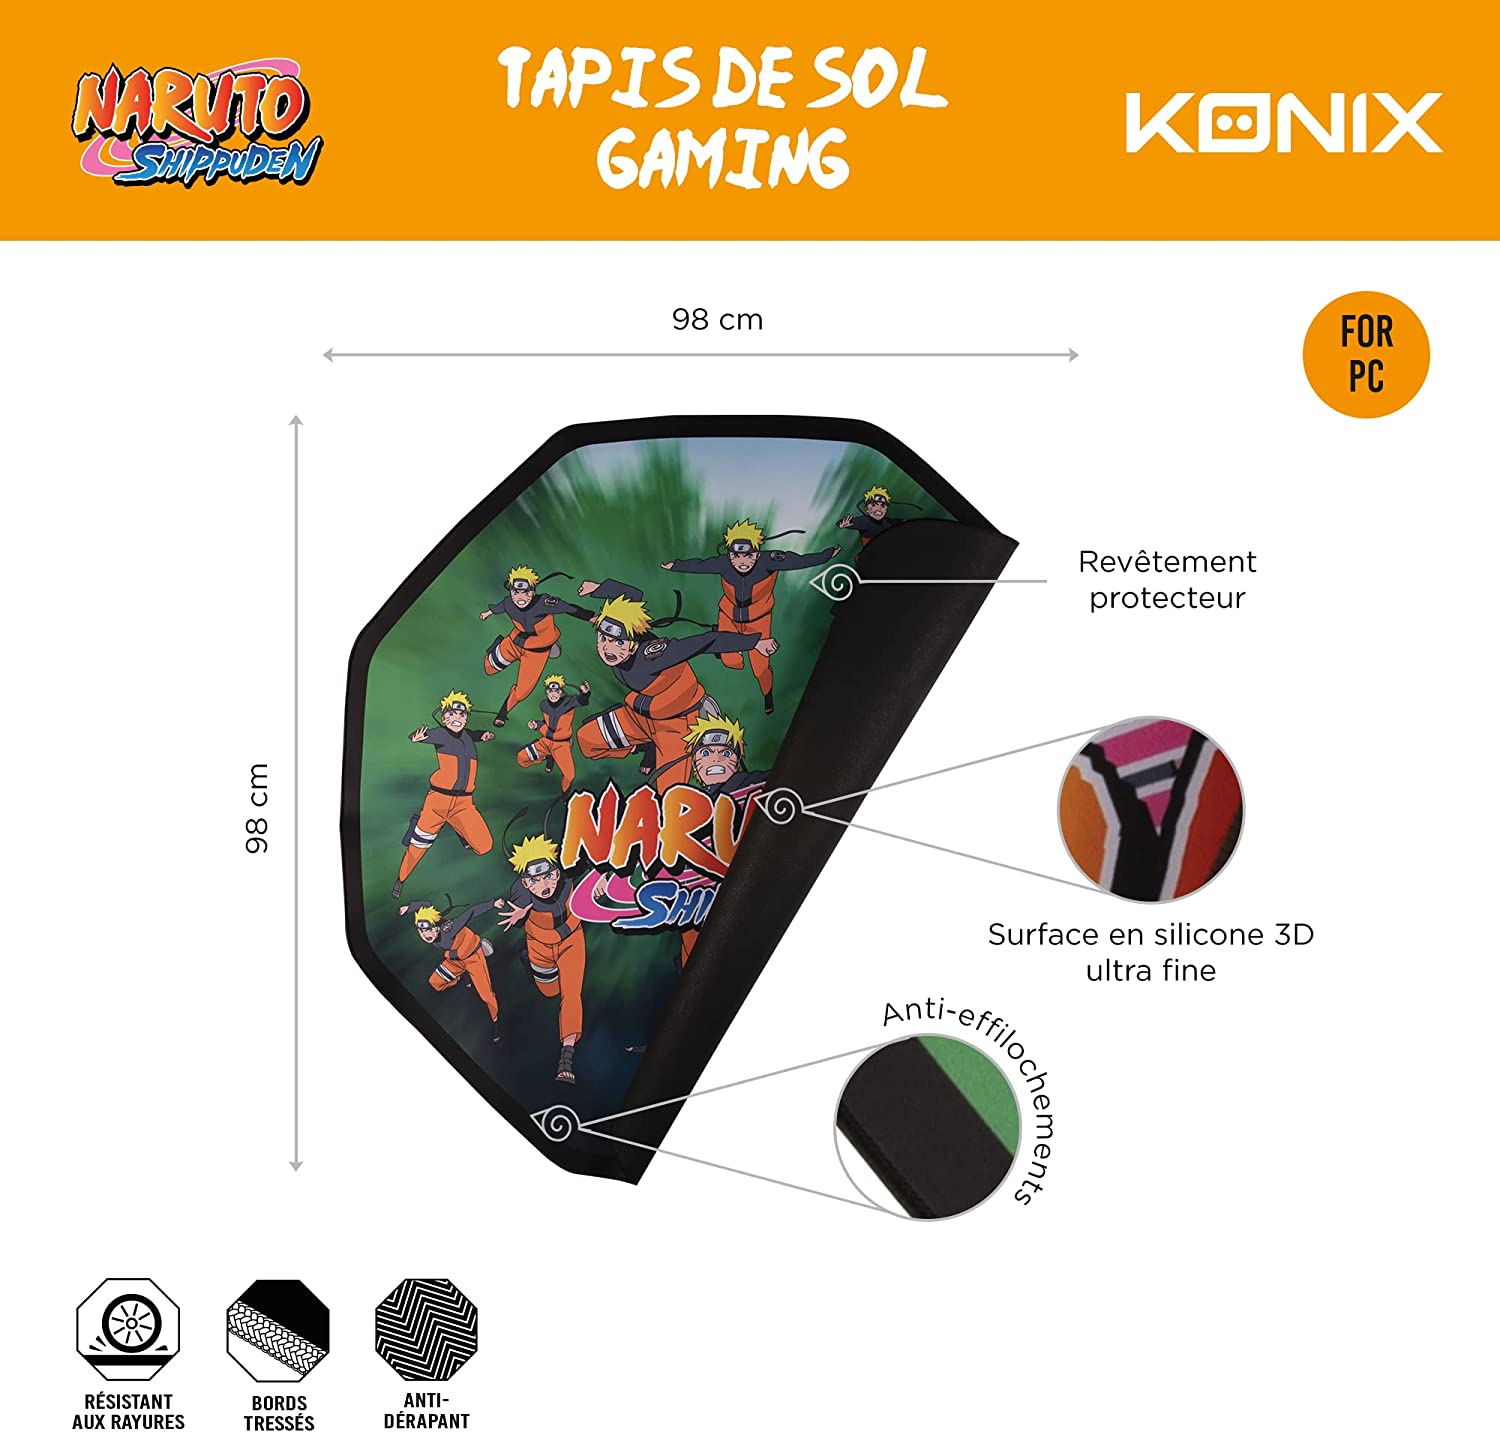 Naruto Multicloning - Tappeto da interni per Gaming 98cm Konix